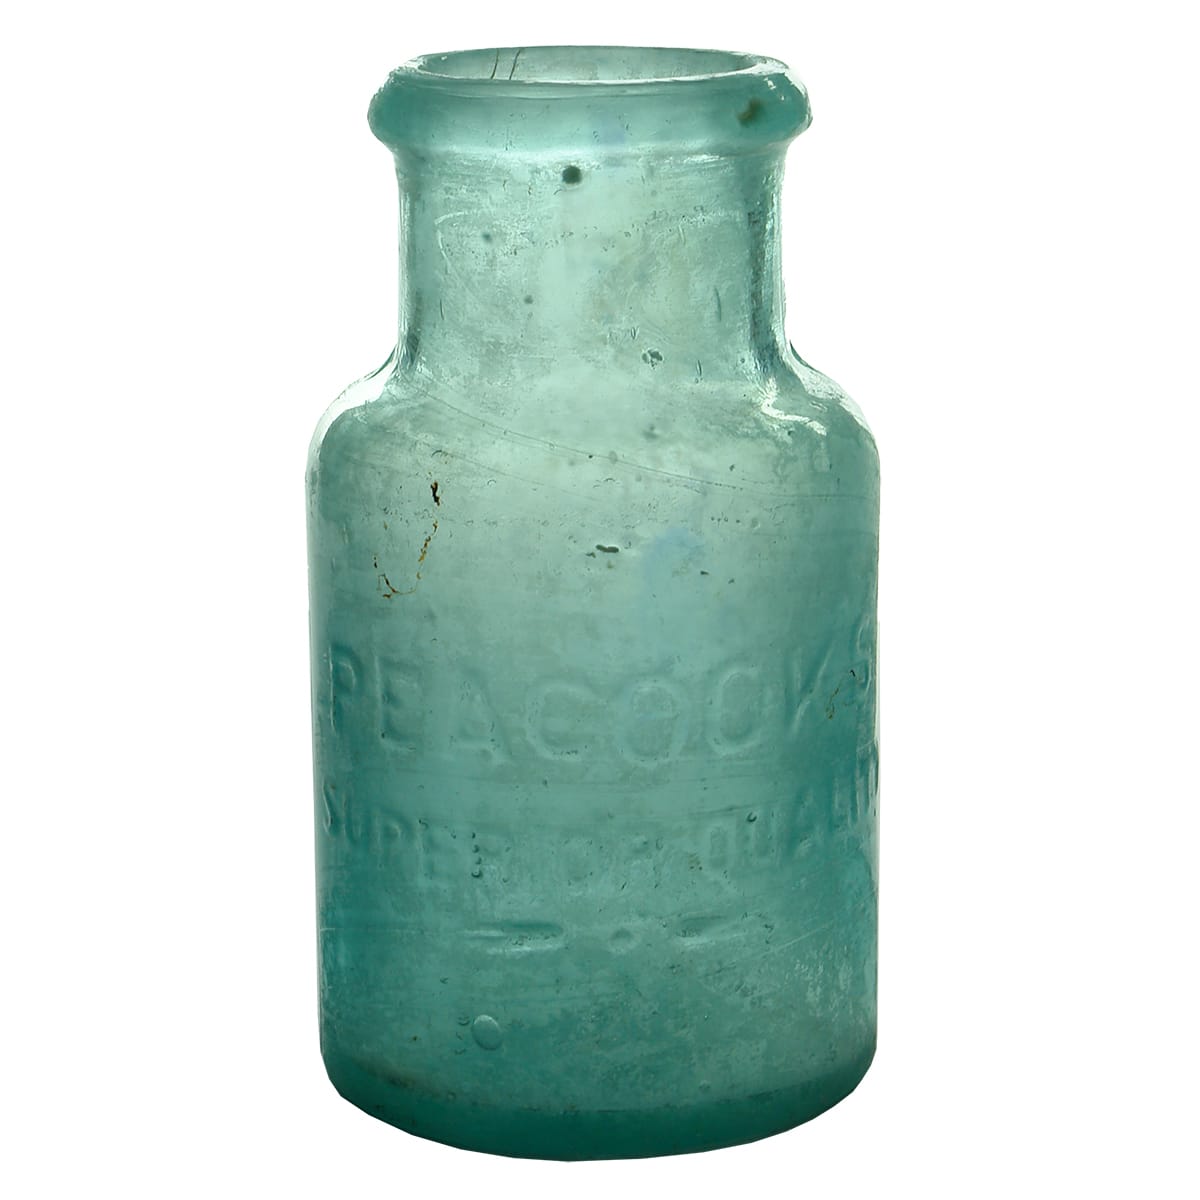 Jam Jar. Peacock's Superior Quality. Blue Aqua. Small size. 1 Pound. (New South Wales)